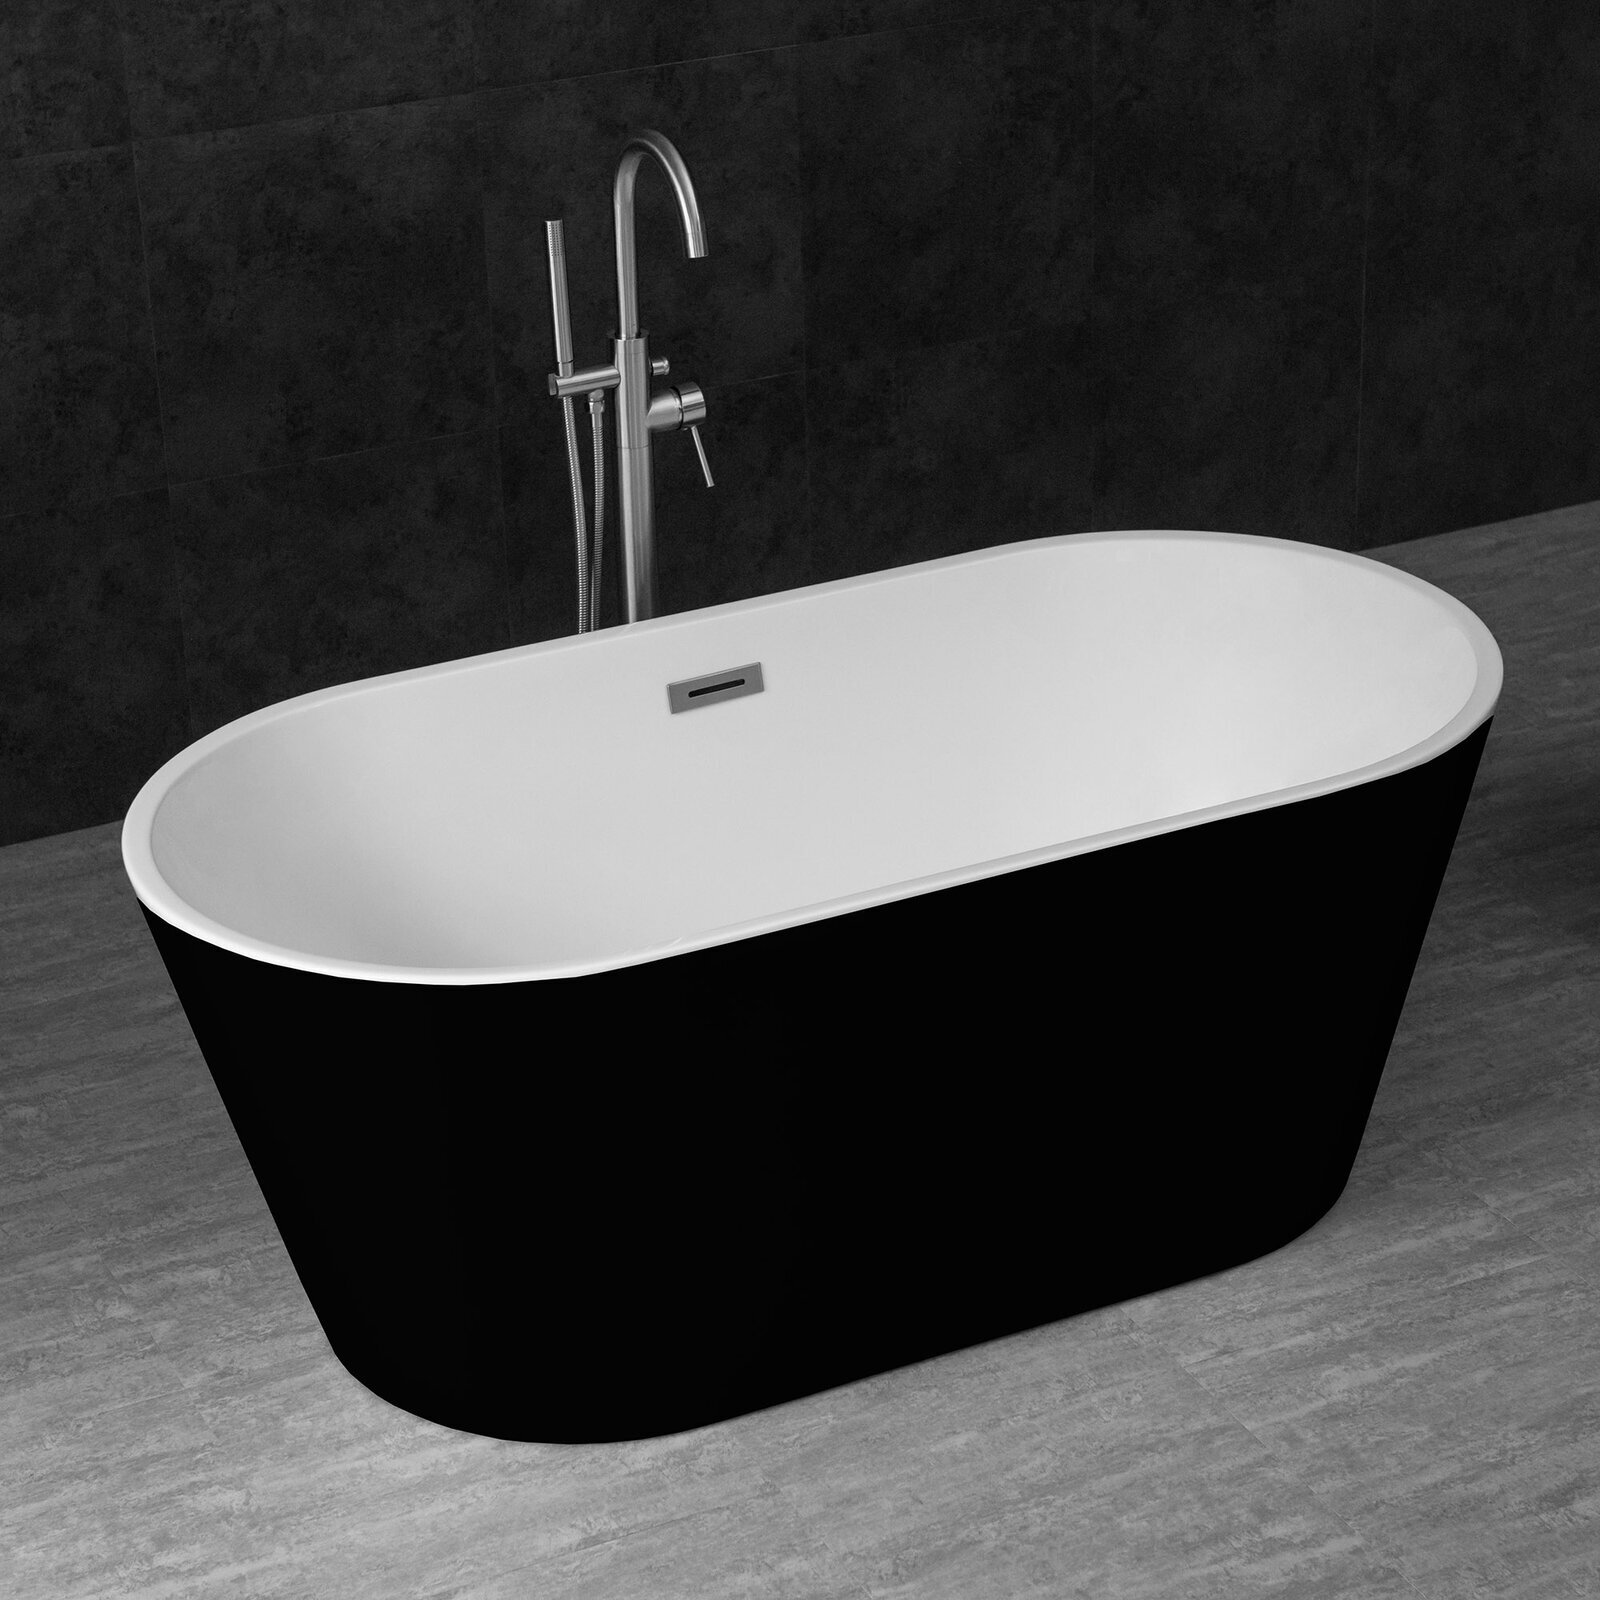 Black, curved freestanding tub corner